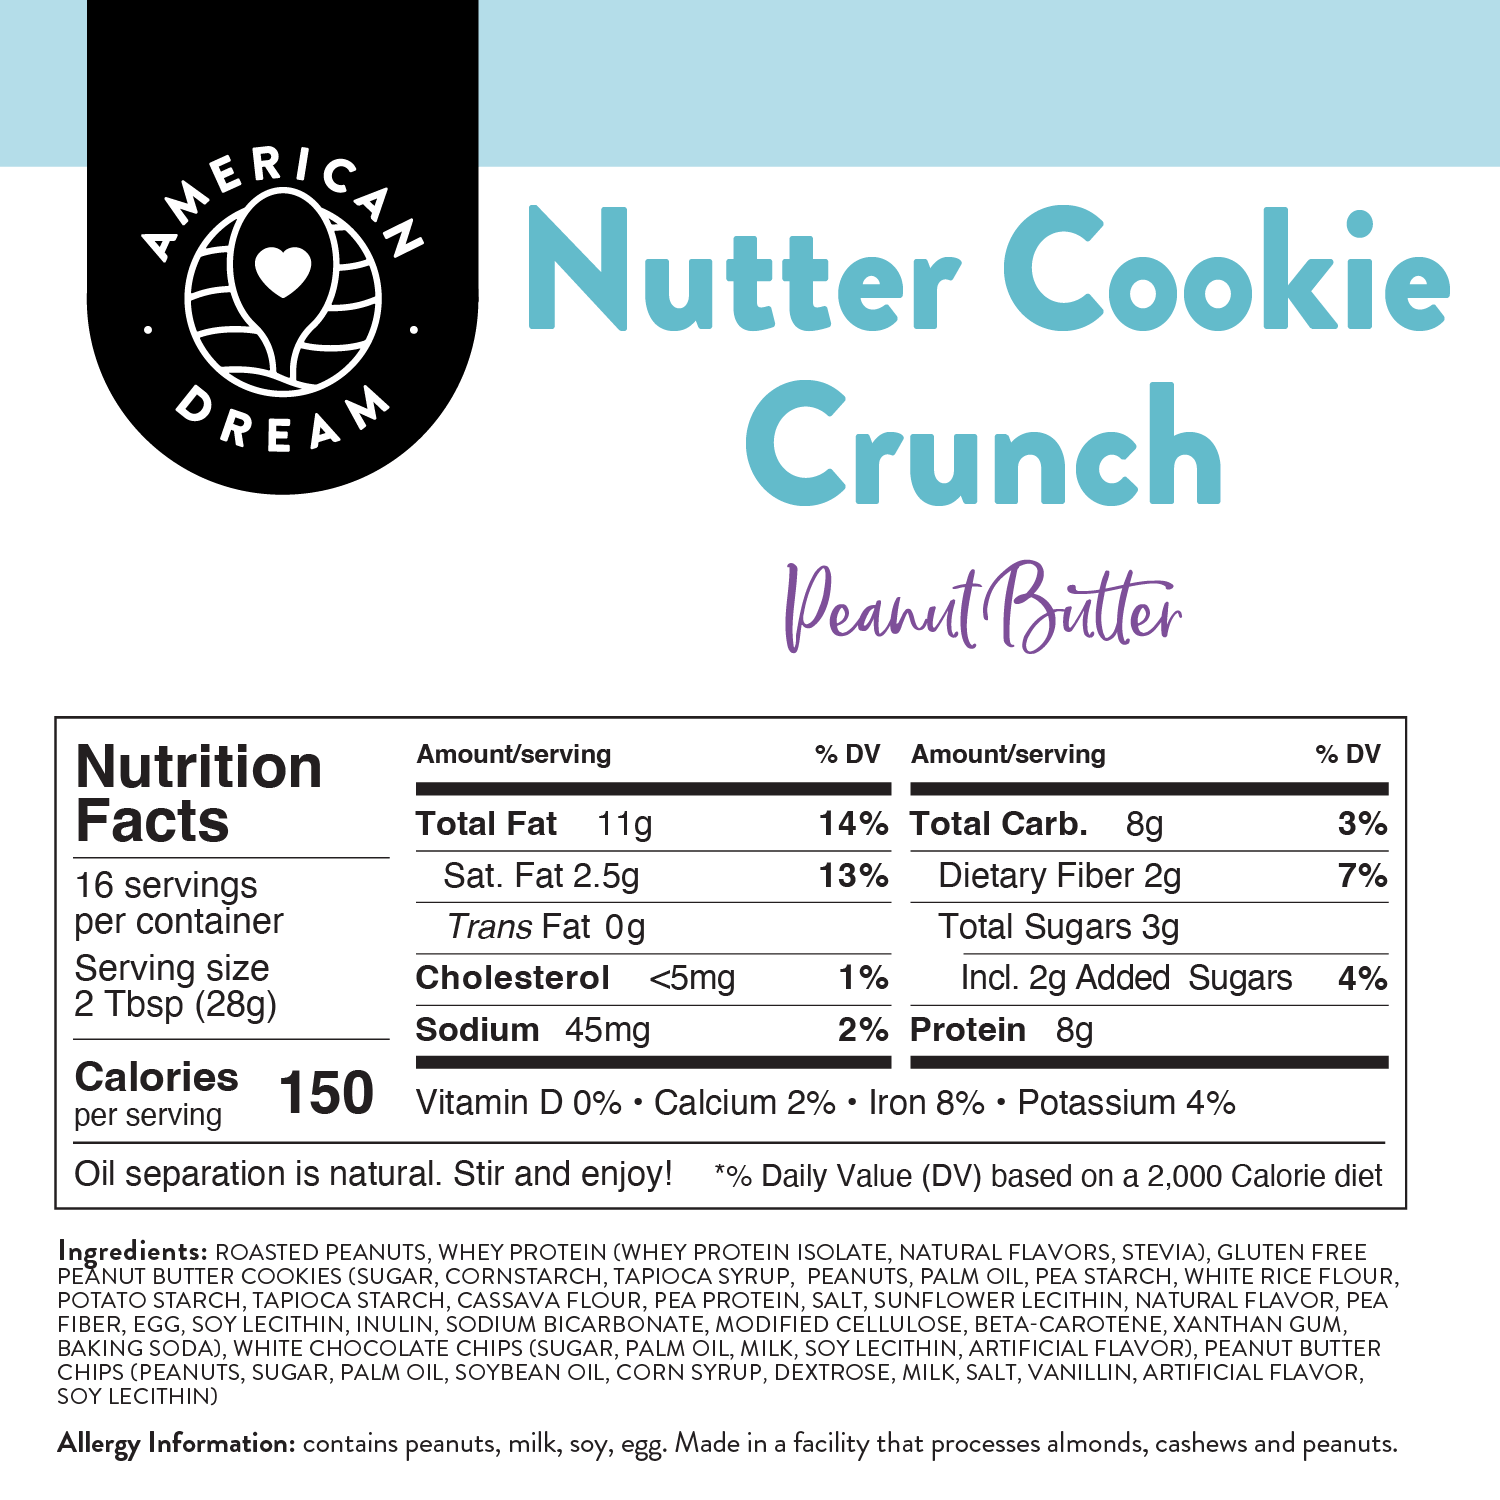 Gluten-Free Nutter Cookie Crunch Peanut Butter